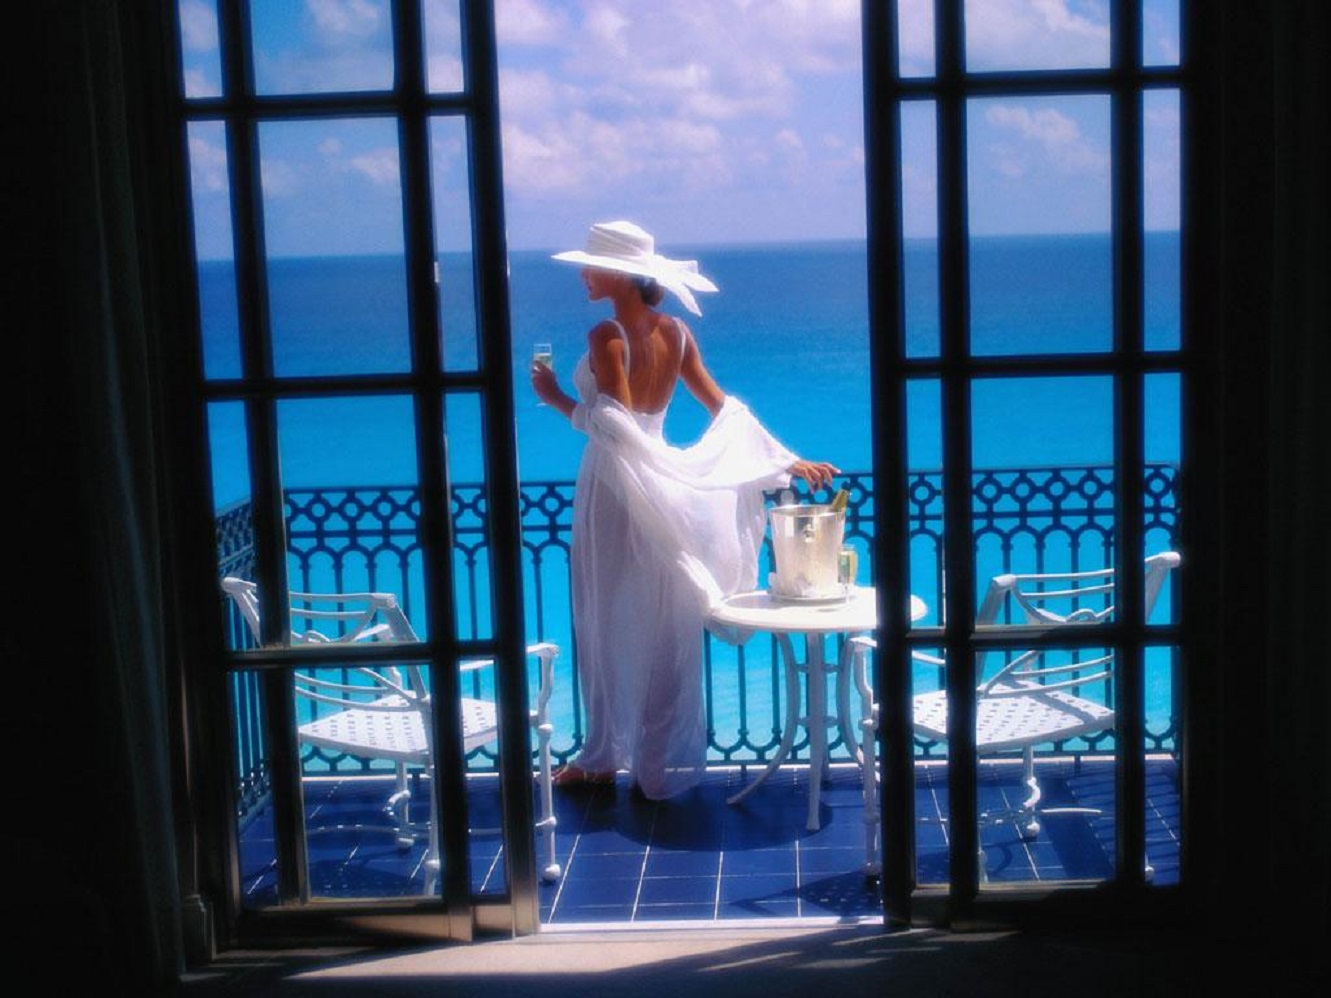 За окном белом платье. Девушка с видом на море. Девушка со шляпой с видом на море. Девушка на балконе с видом на море. Девушка окно море.